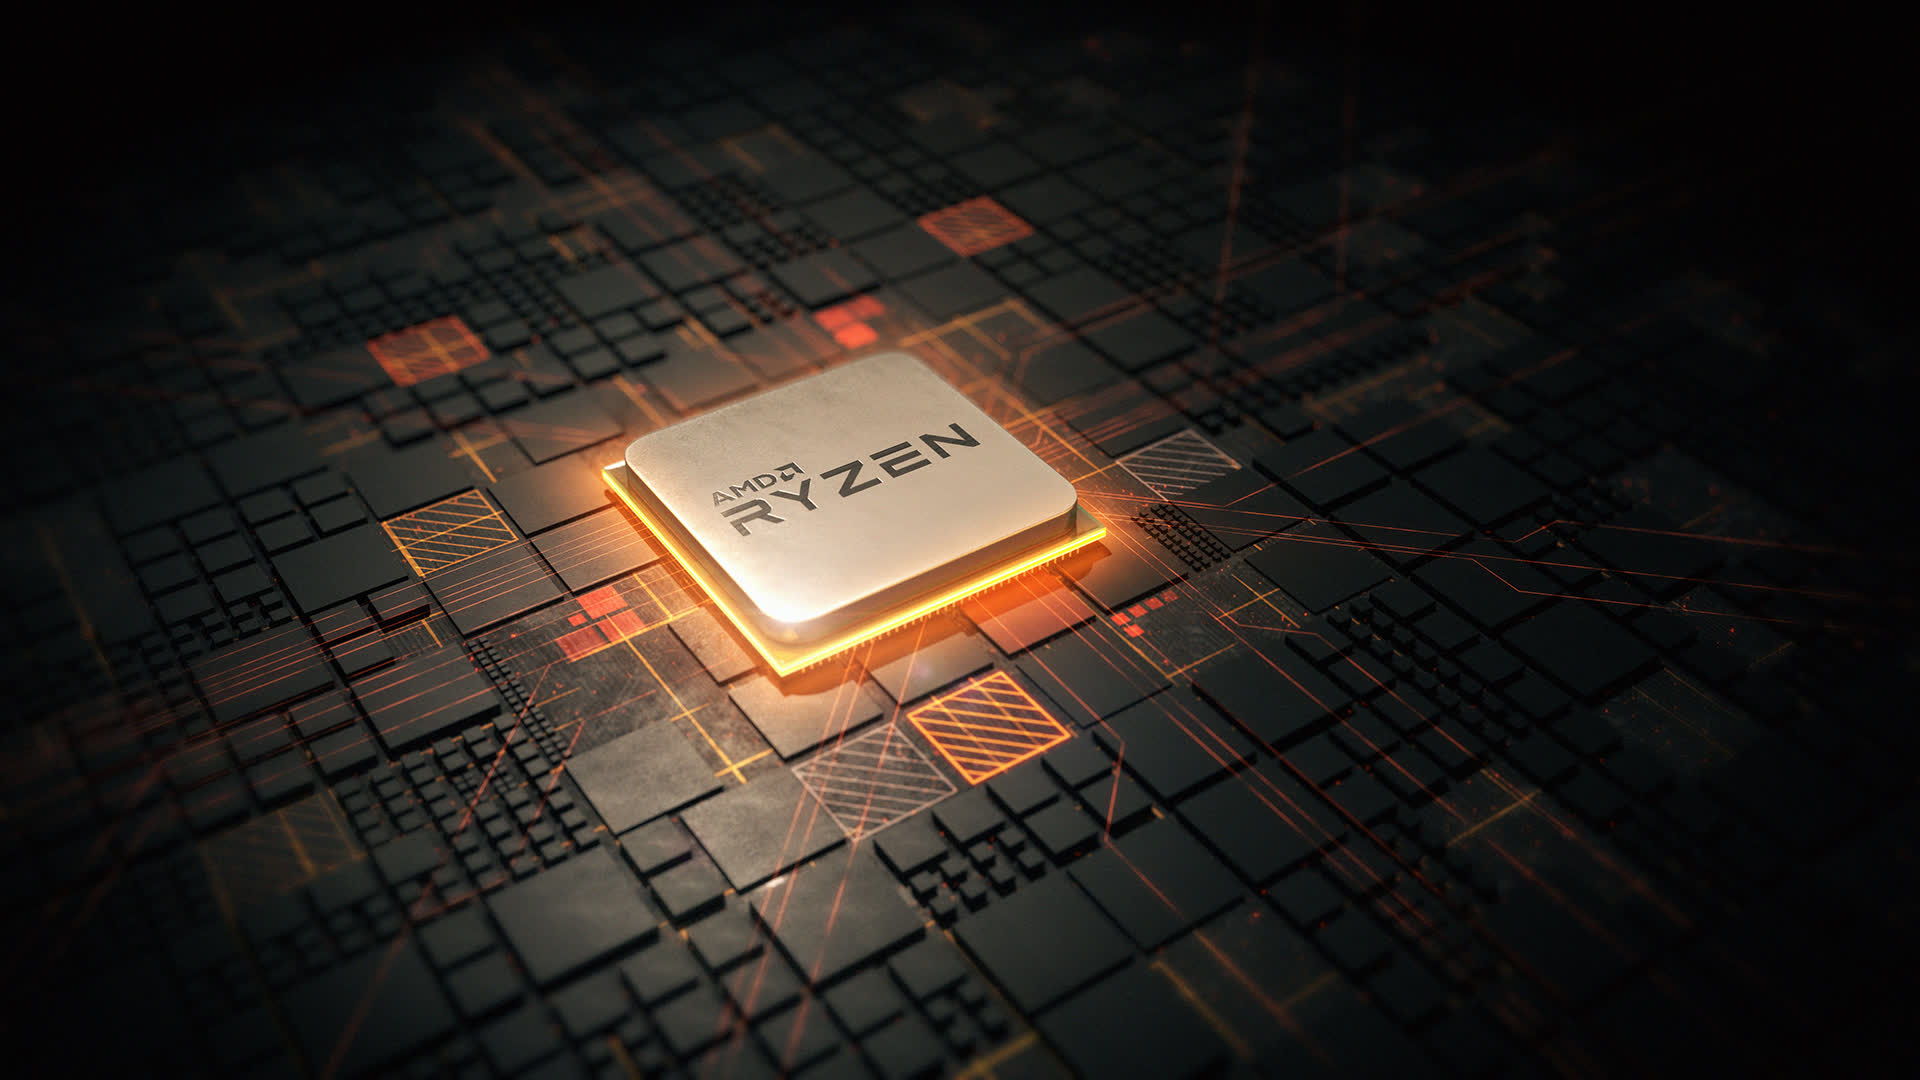 AMD's Ryzen 9 5950X pushed to a record 6362 MHz on liquid nitrogen